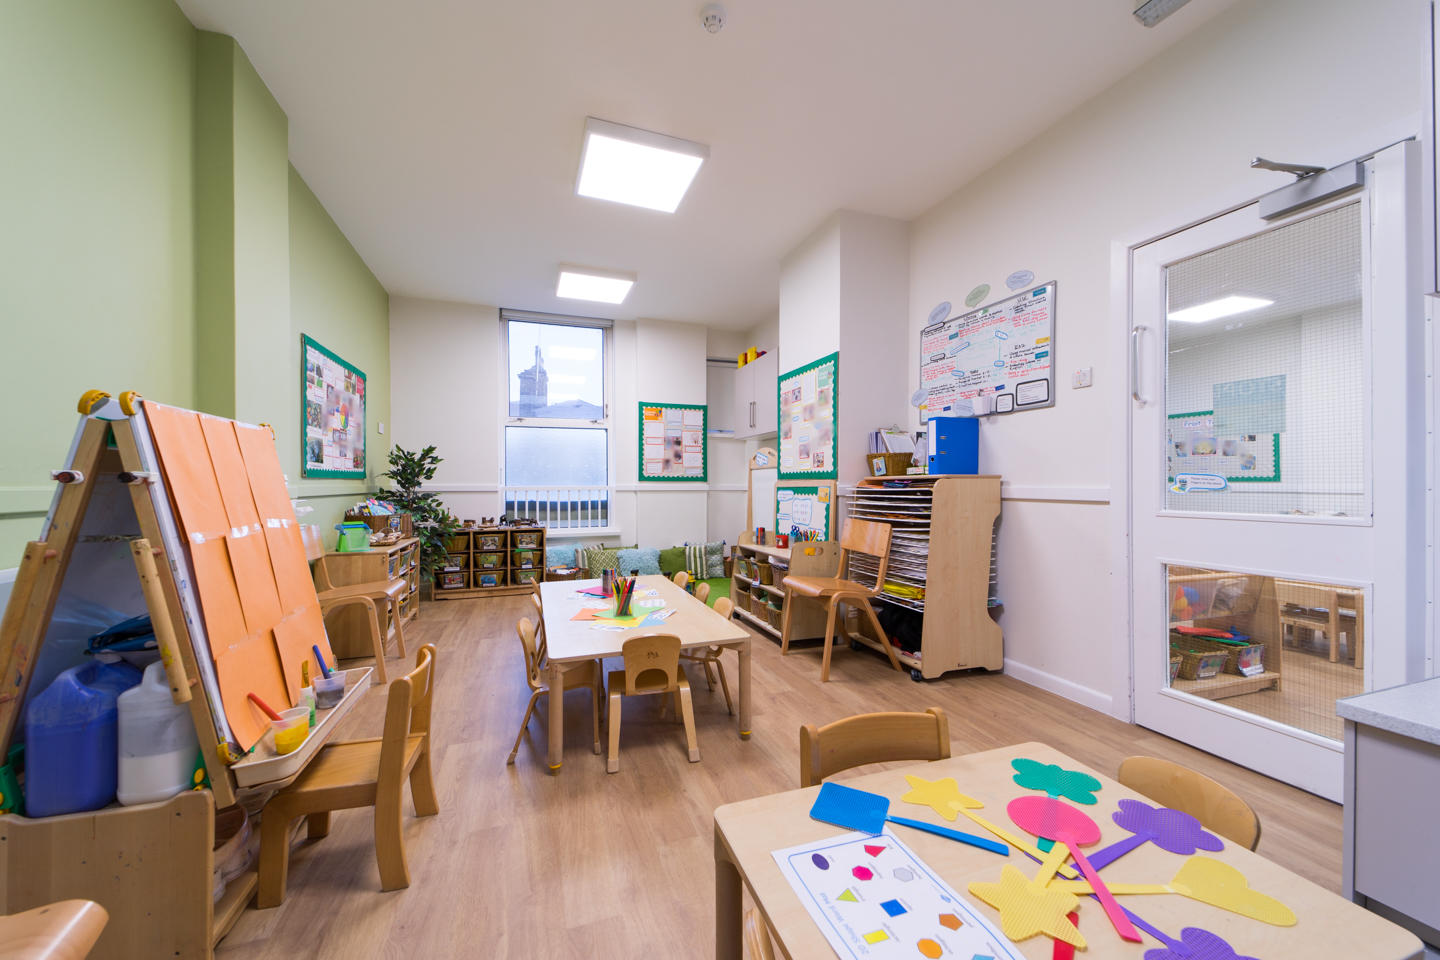 Bright Horizons East Greenwich Day Nursery and Preschool London 03300 574071